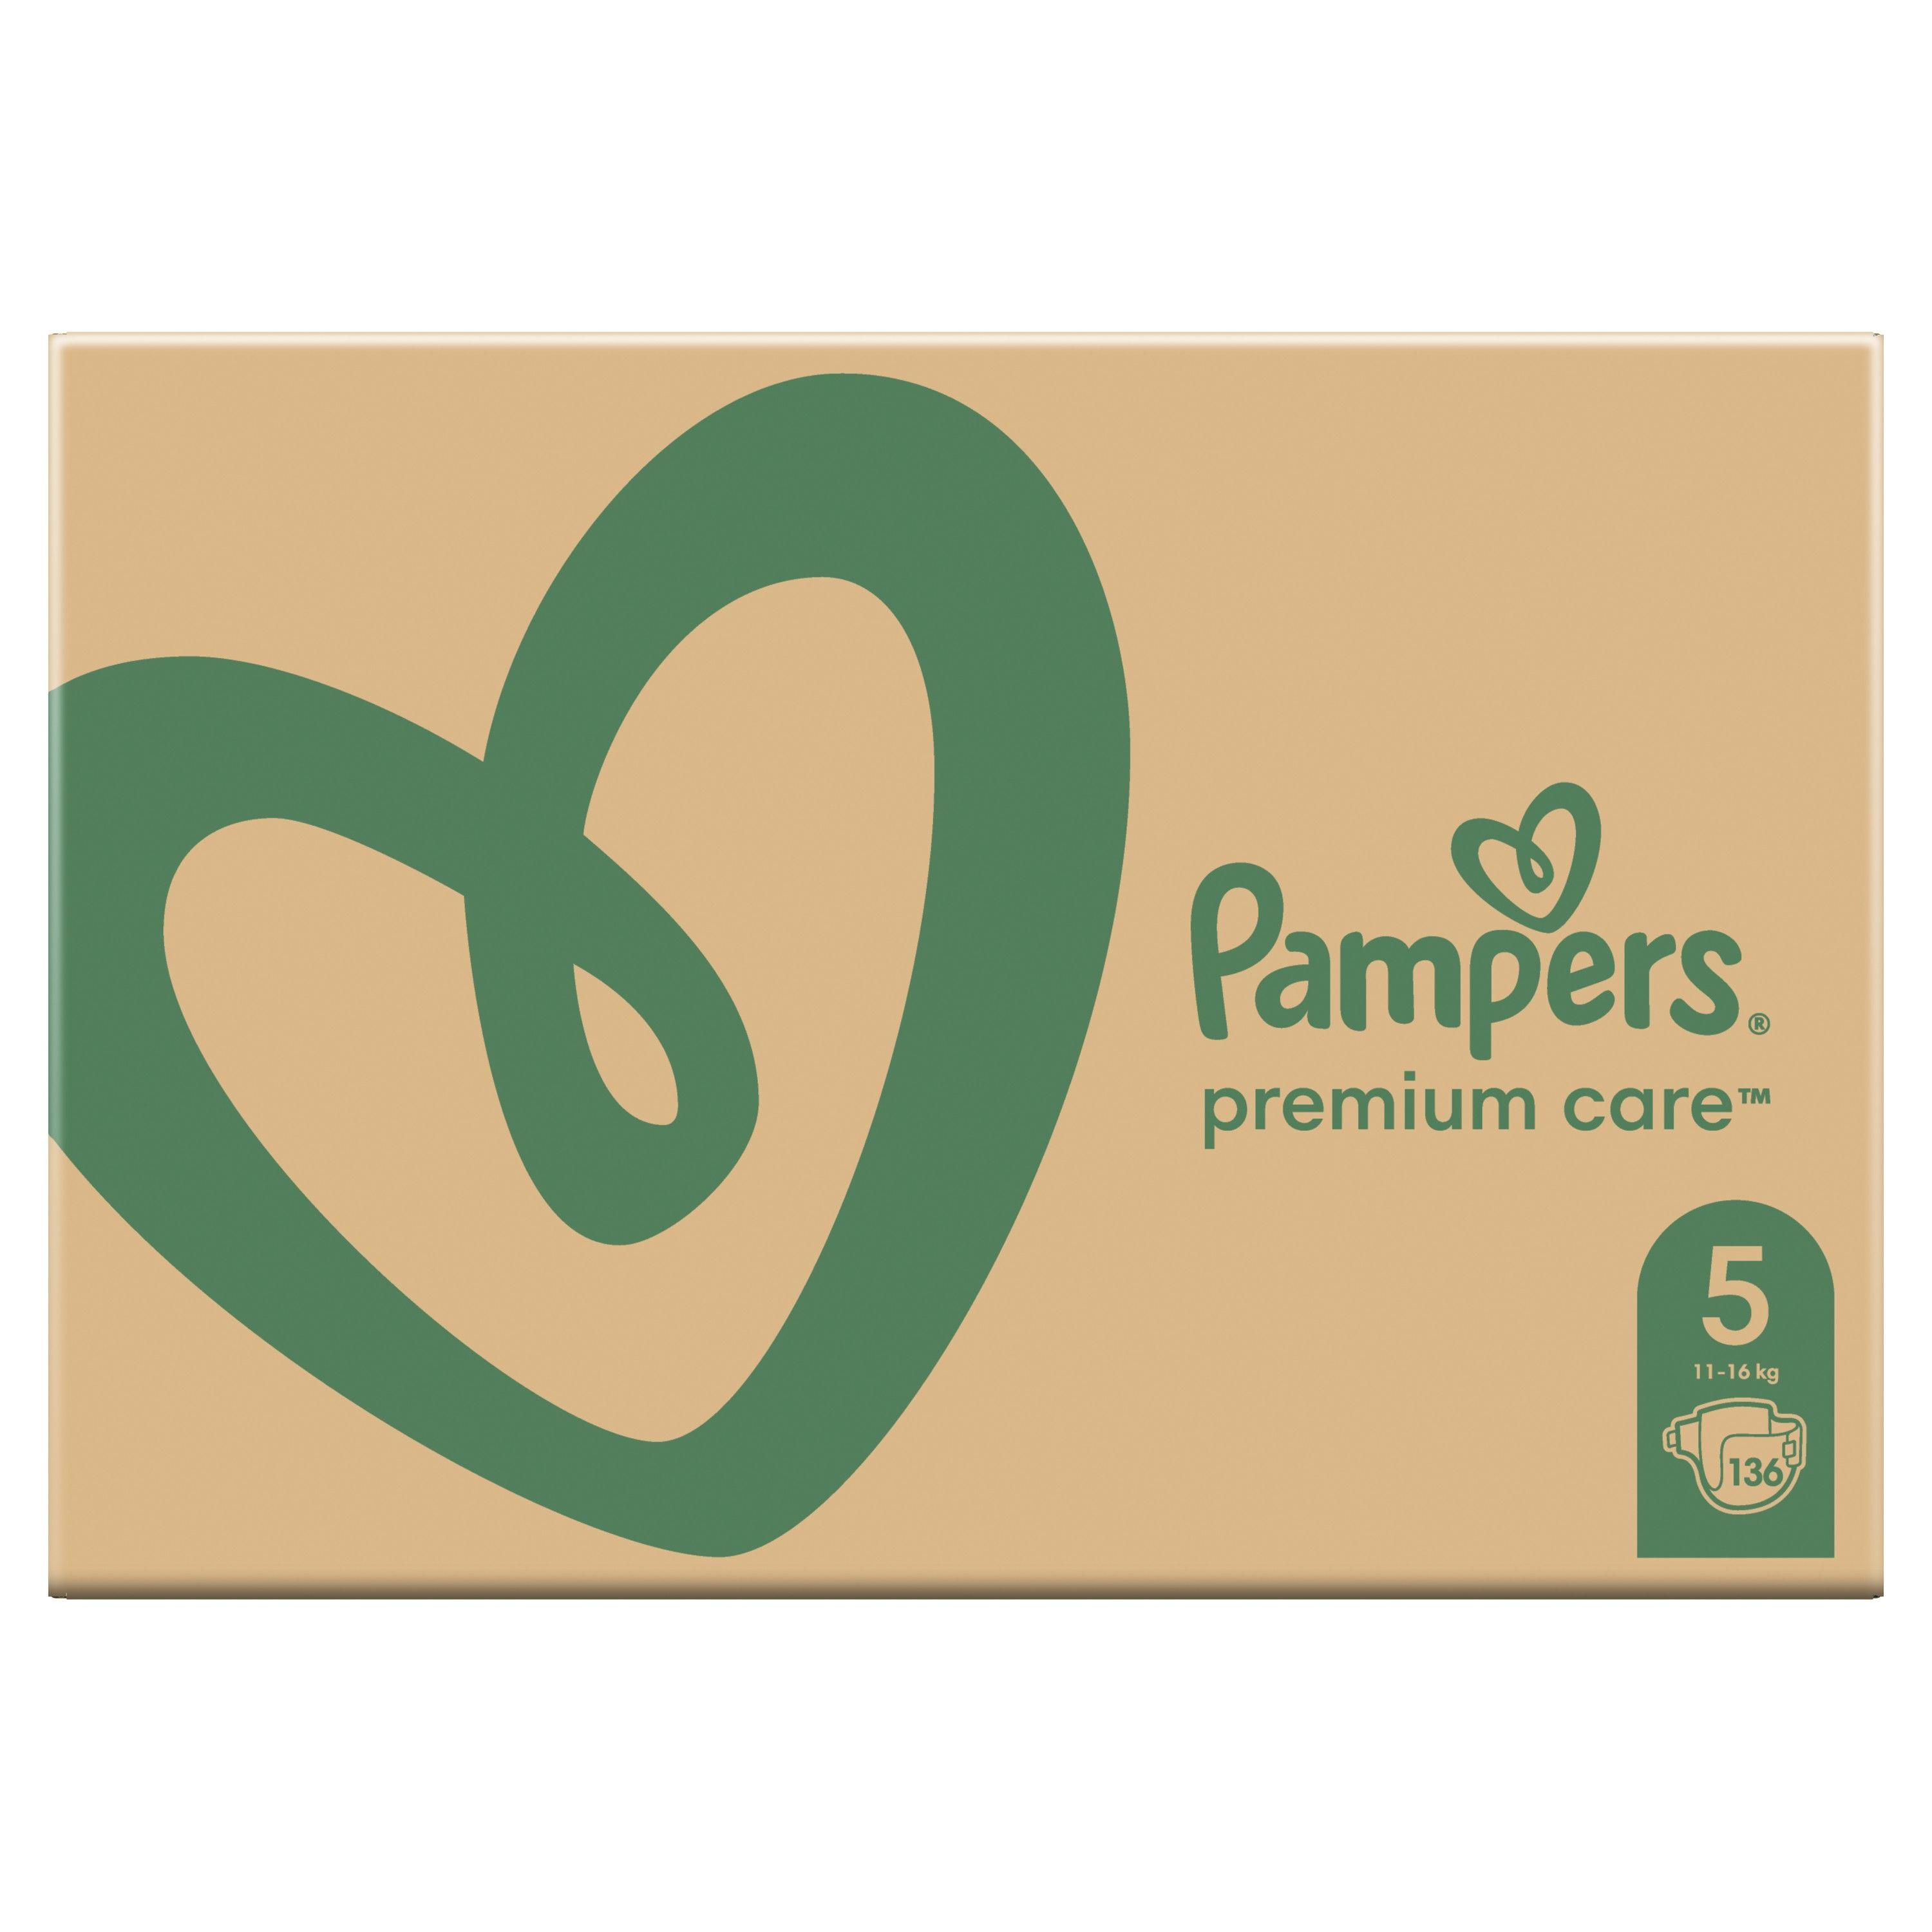 Pampers Zestaw pieluch Premium Care Monthly Box S5 5 (11-16 kg); 136